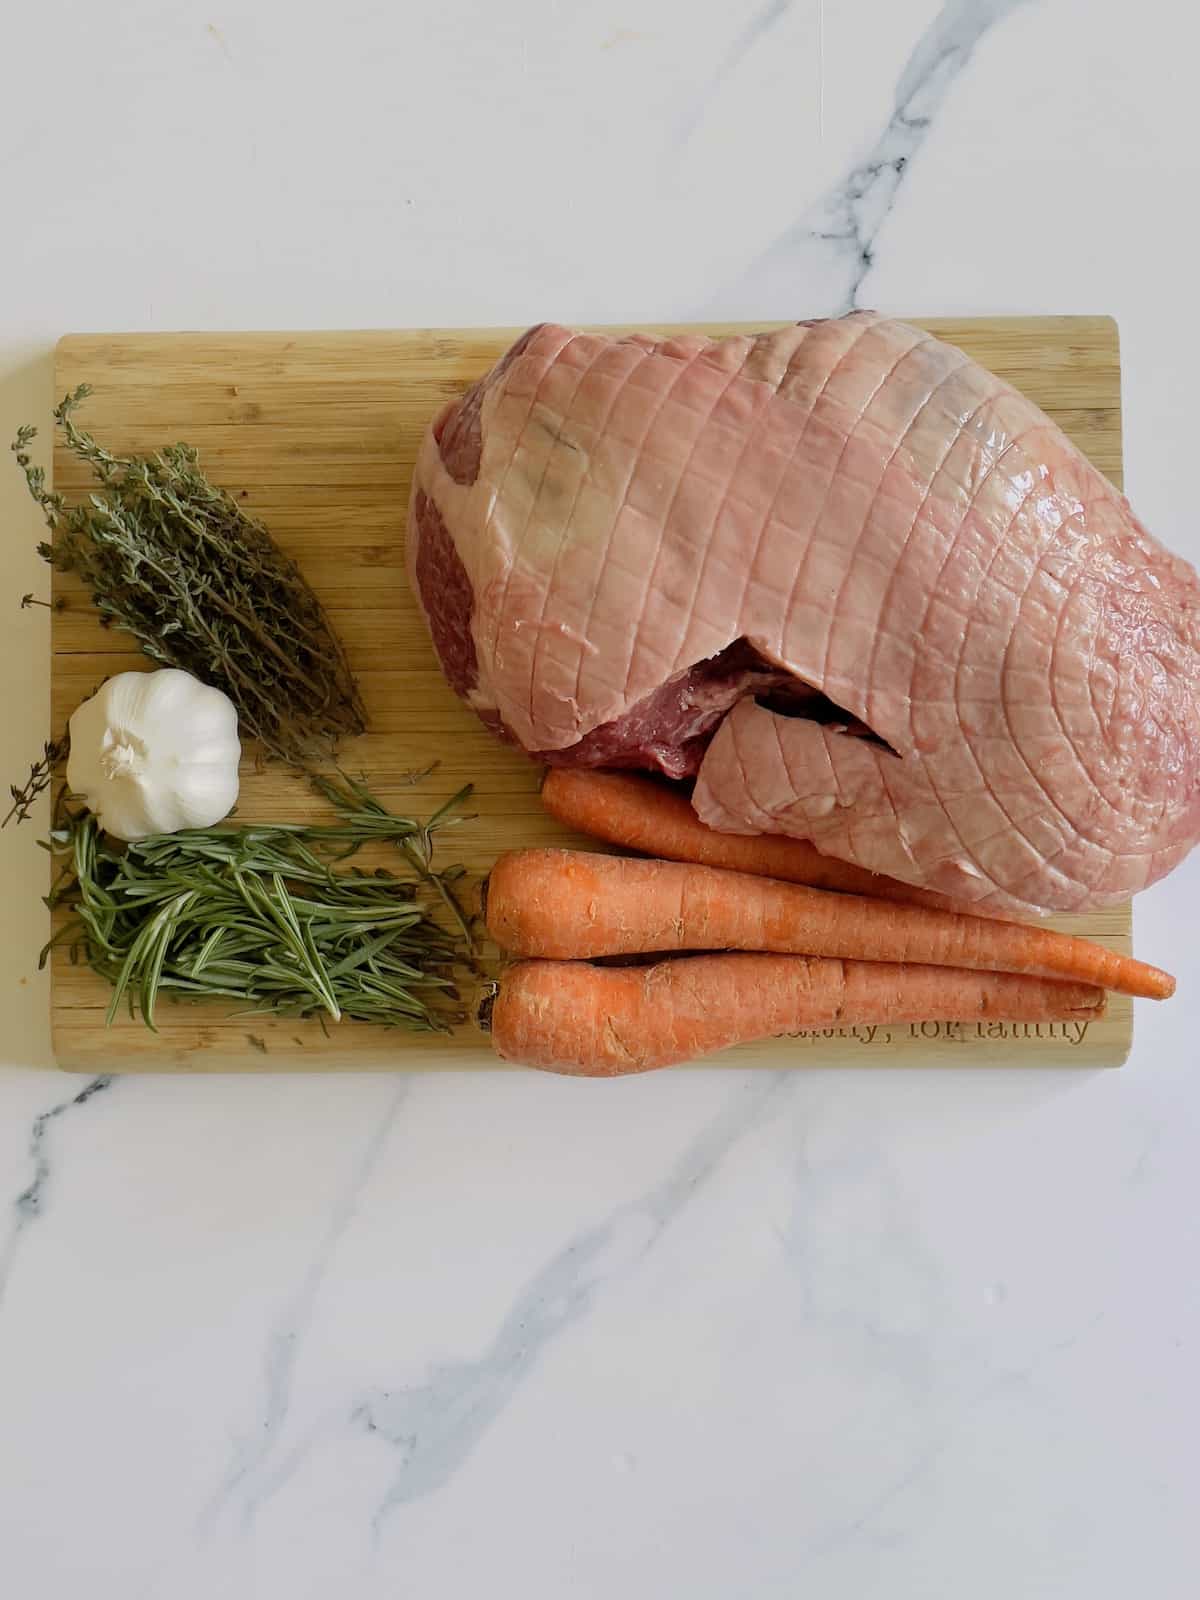 lamb roast, carrots, garlic, and fresh herbs on a cutting board